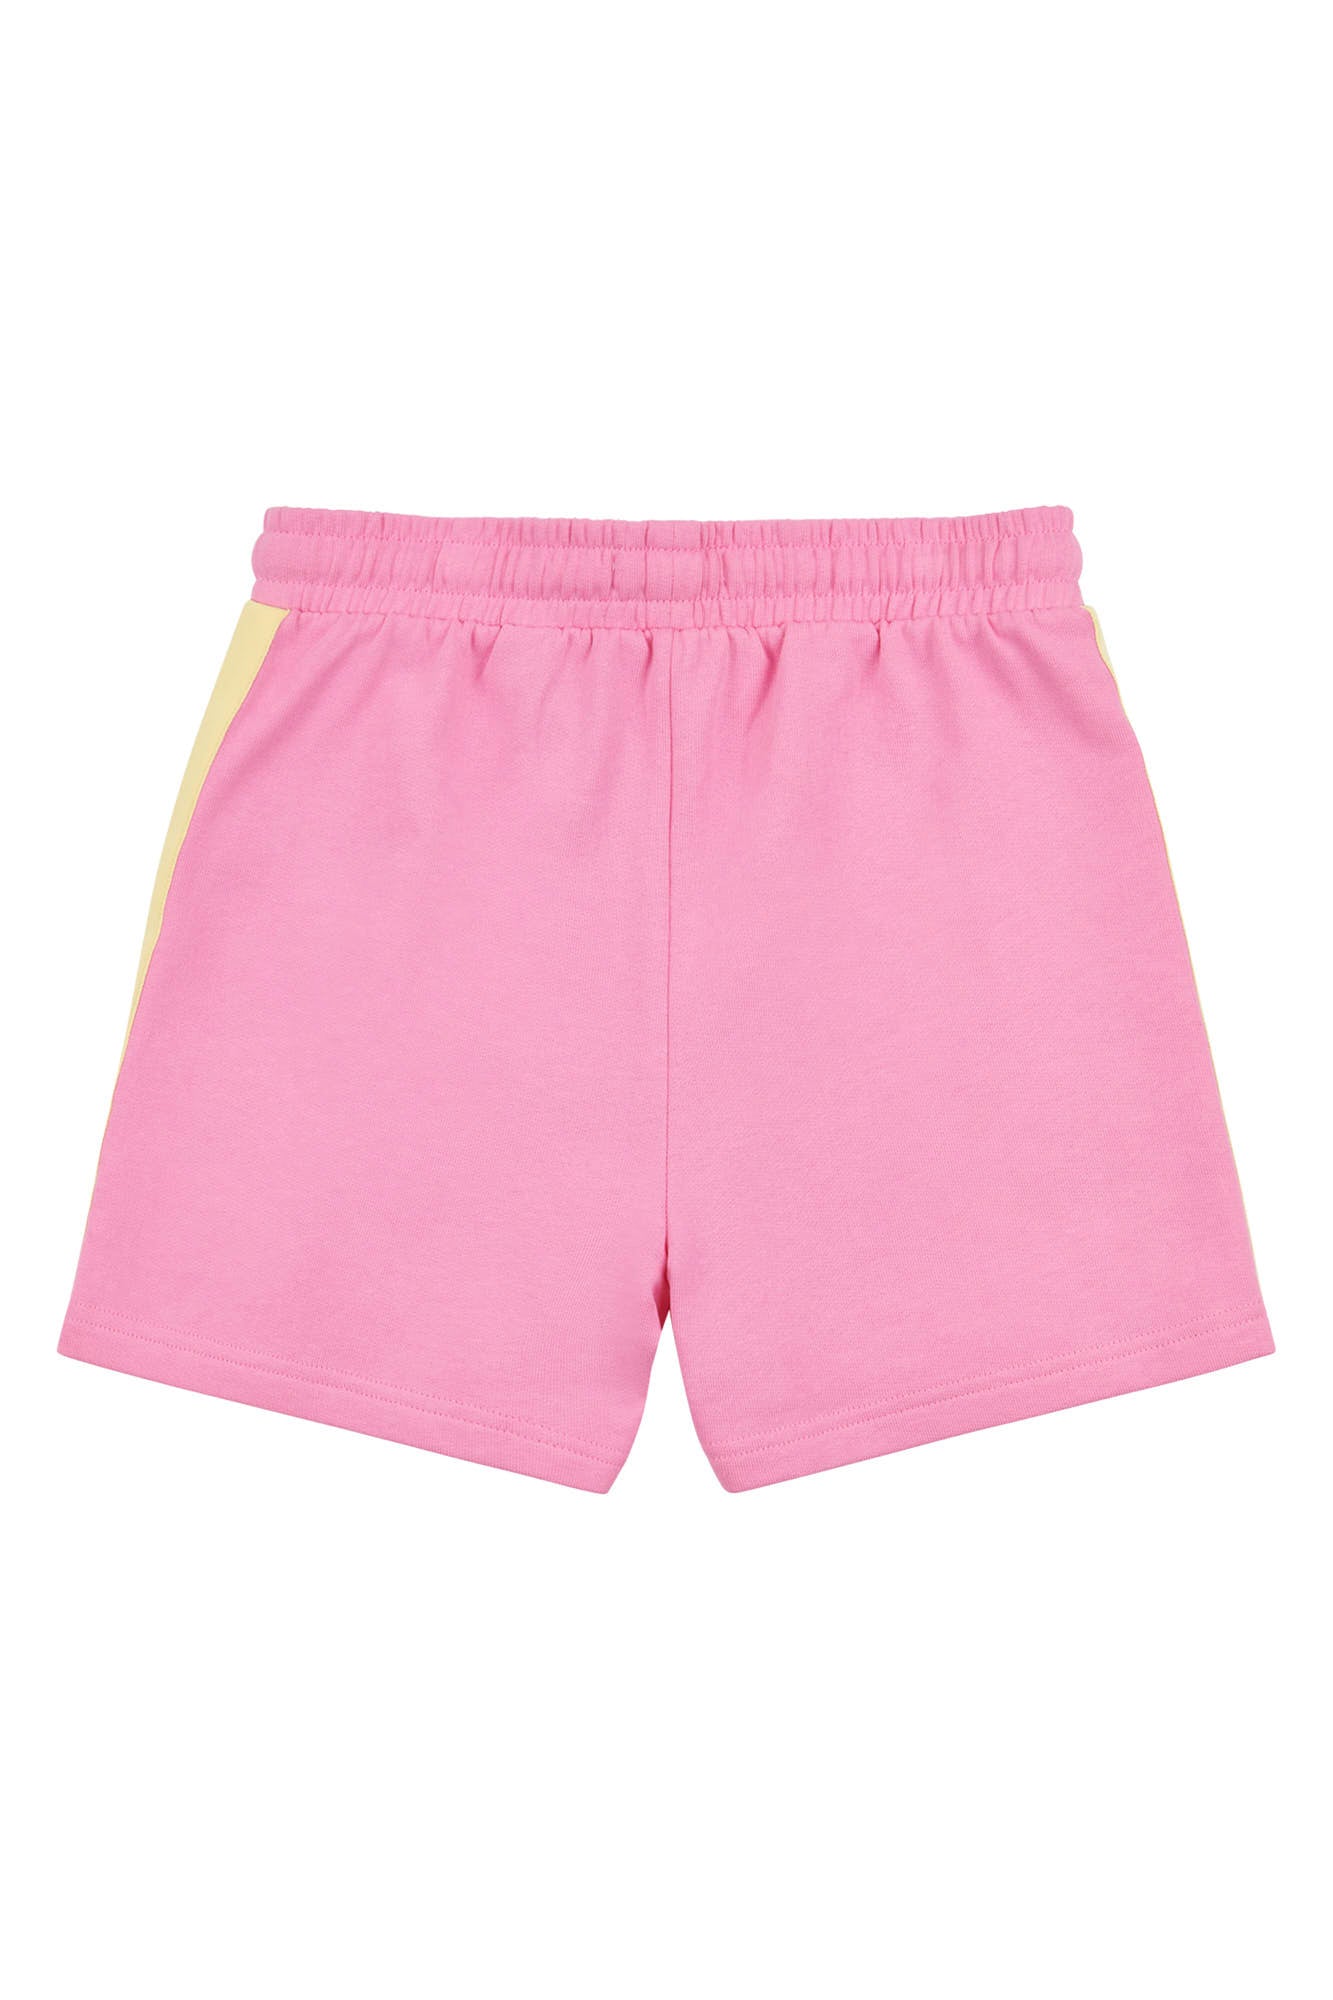 Girls Stripe Shorts in Pink Cosmos